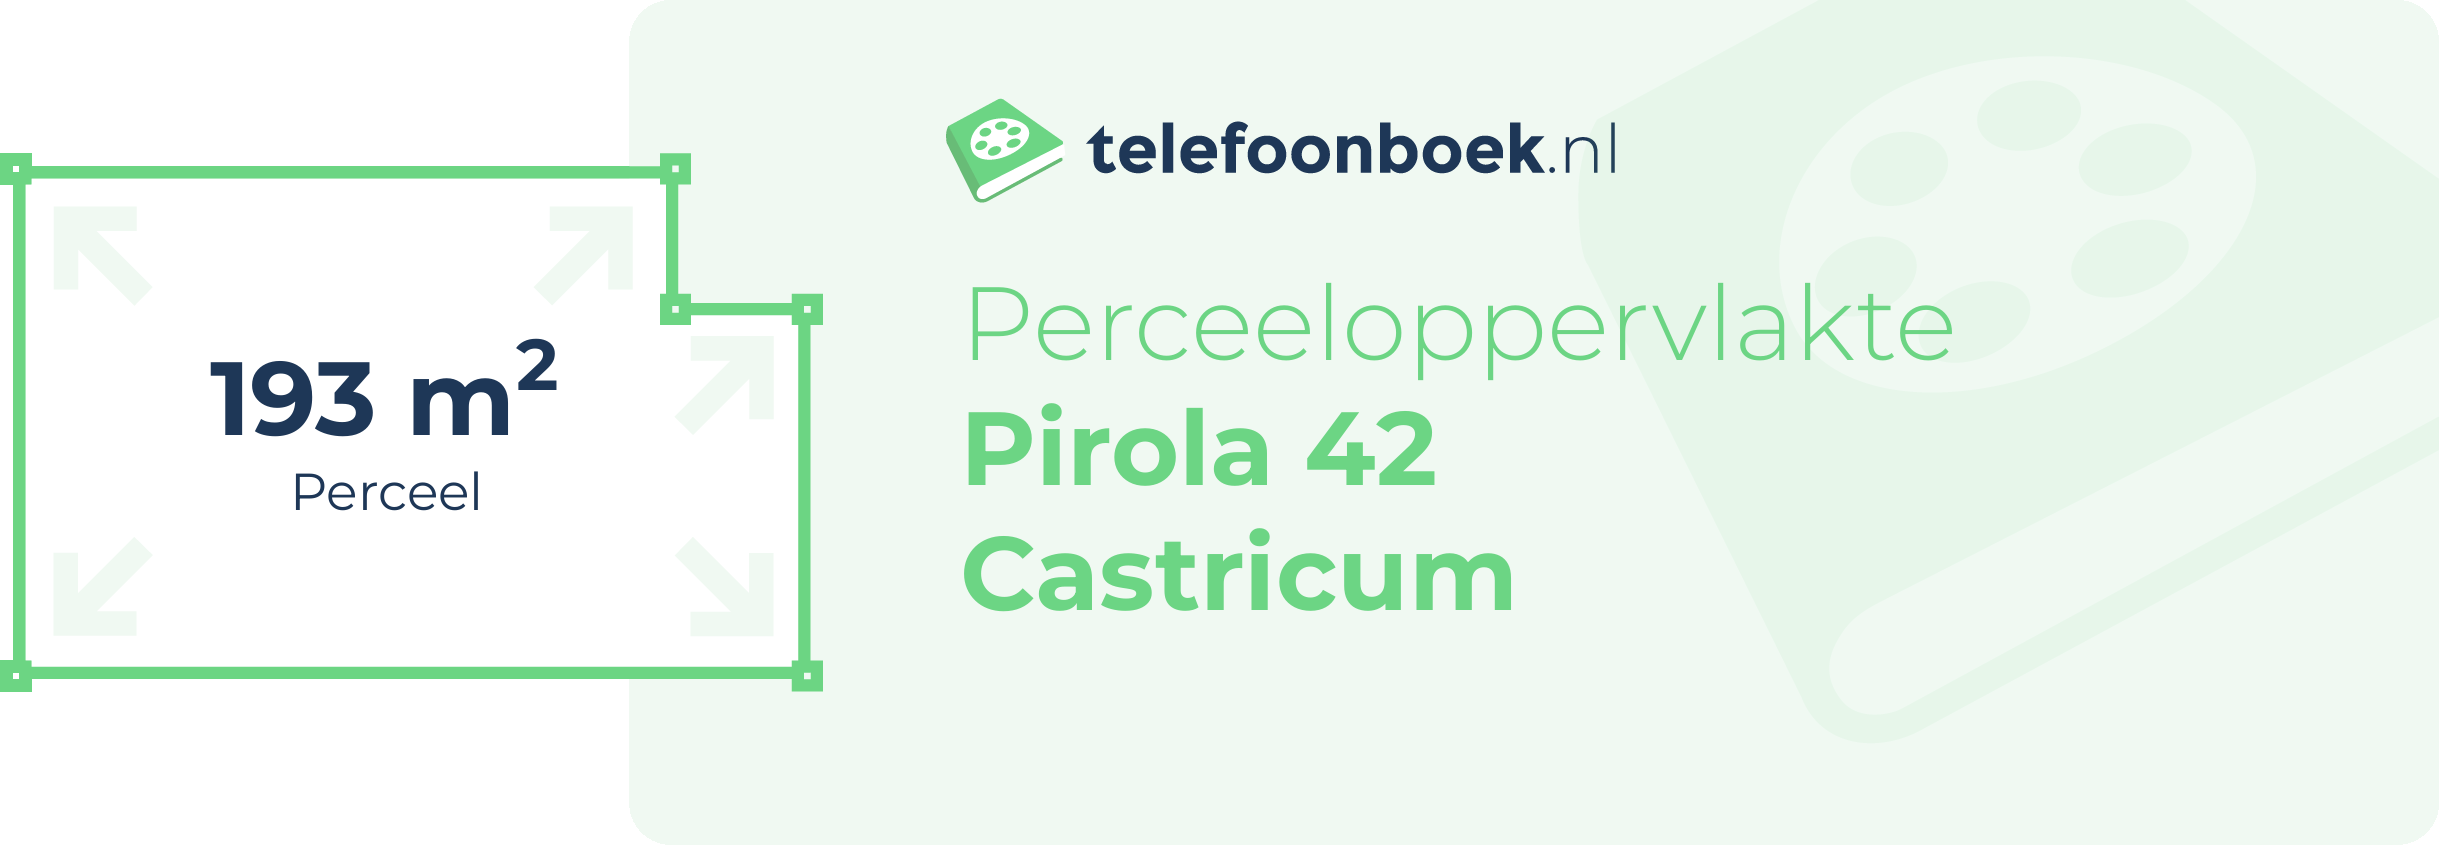 Perceeloppervlakte Pirola 42 Castricum